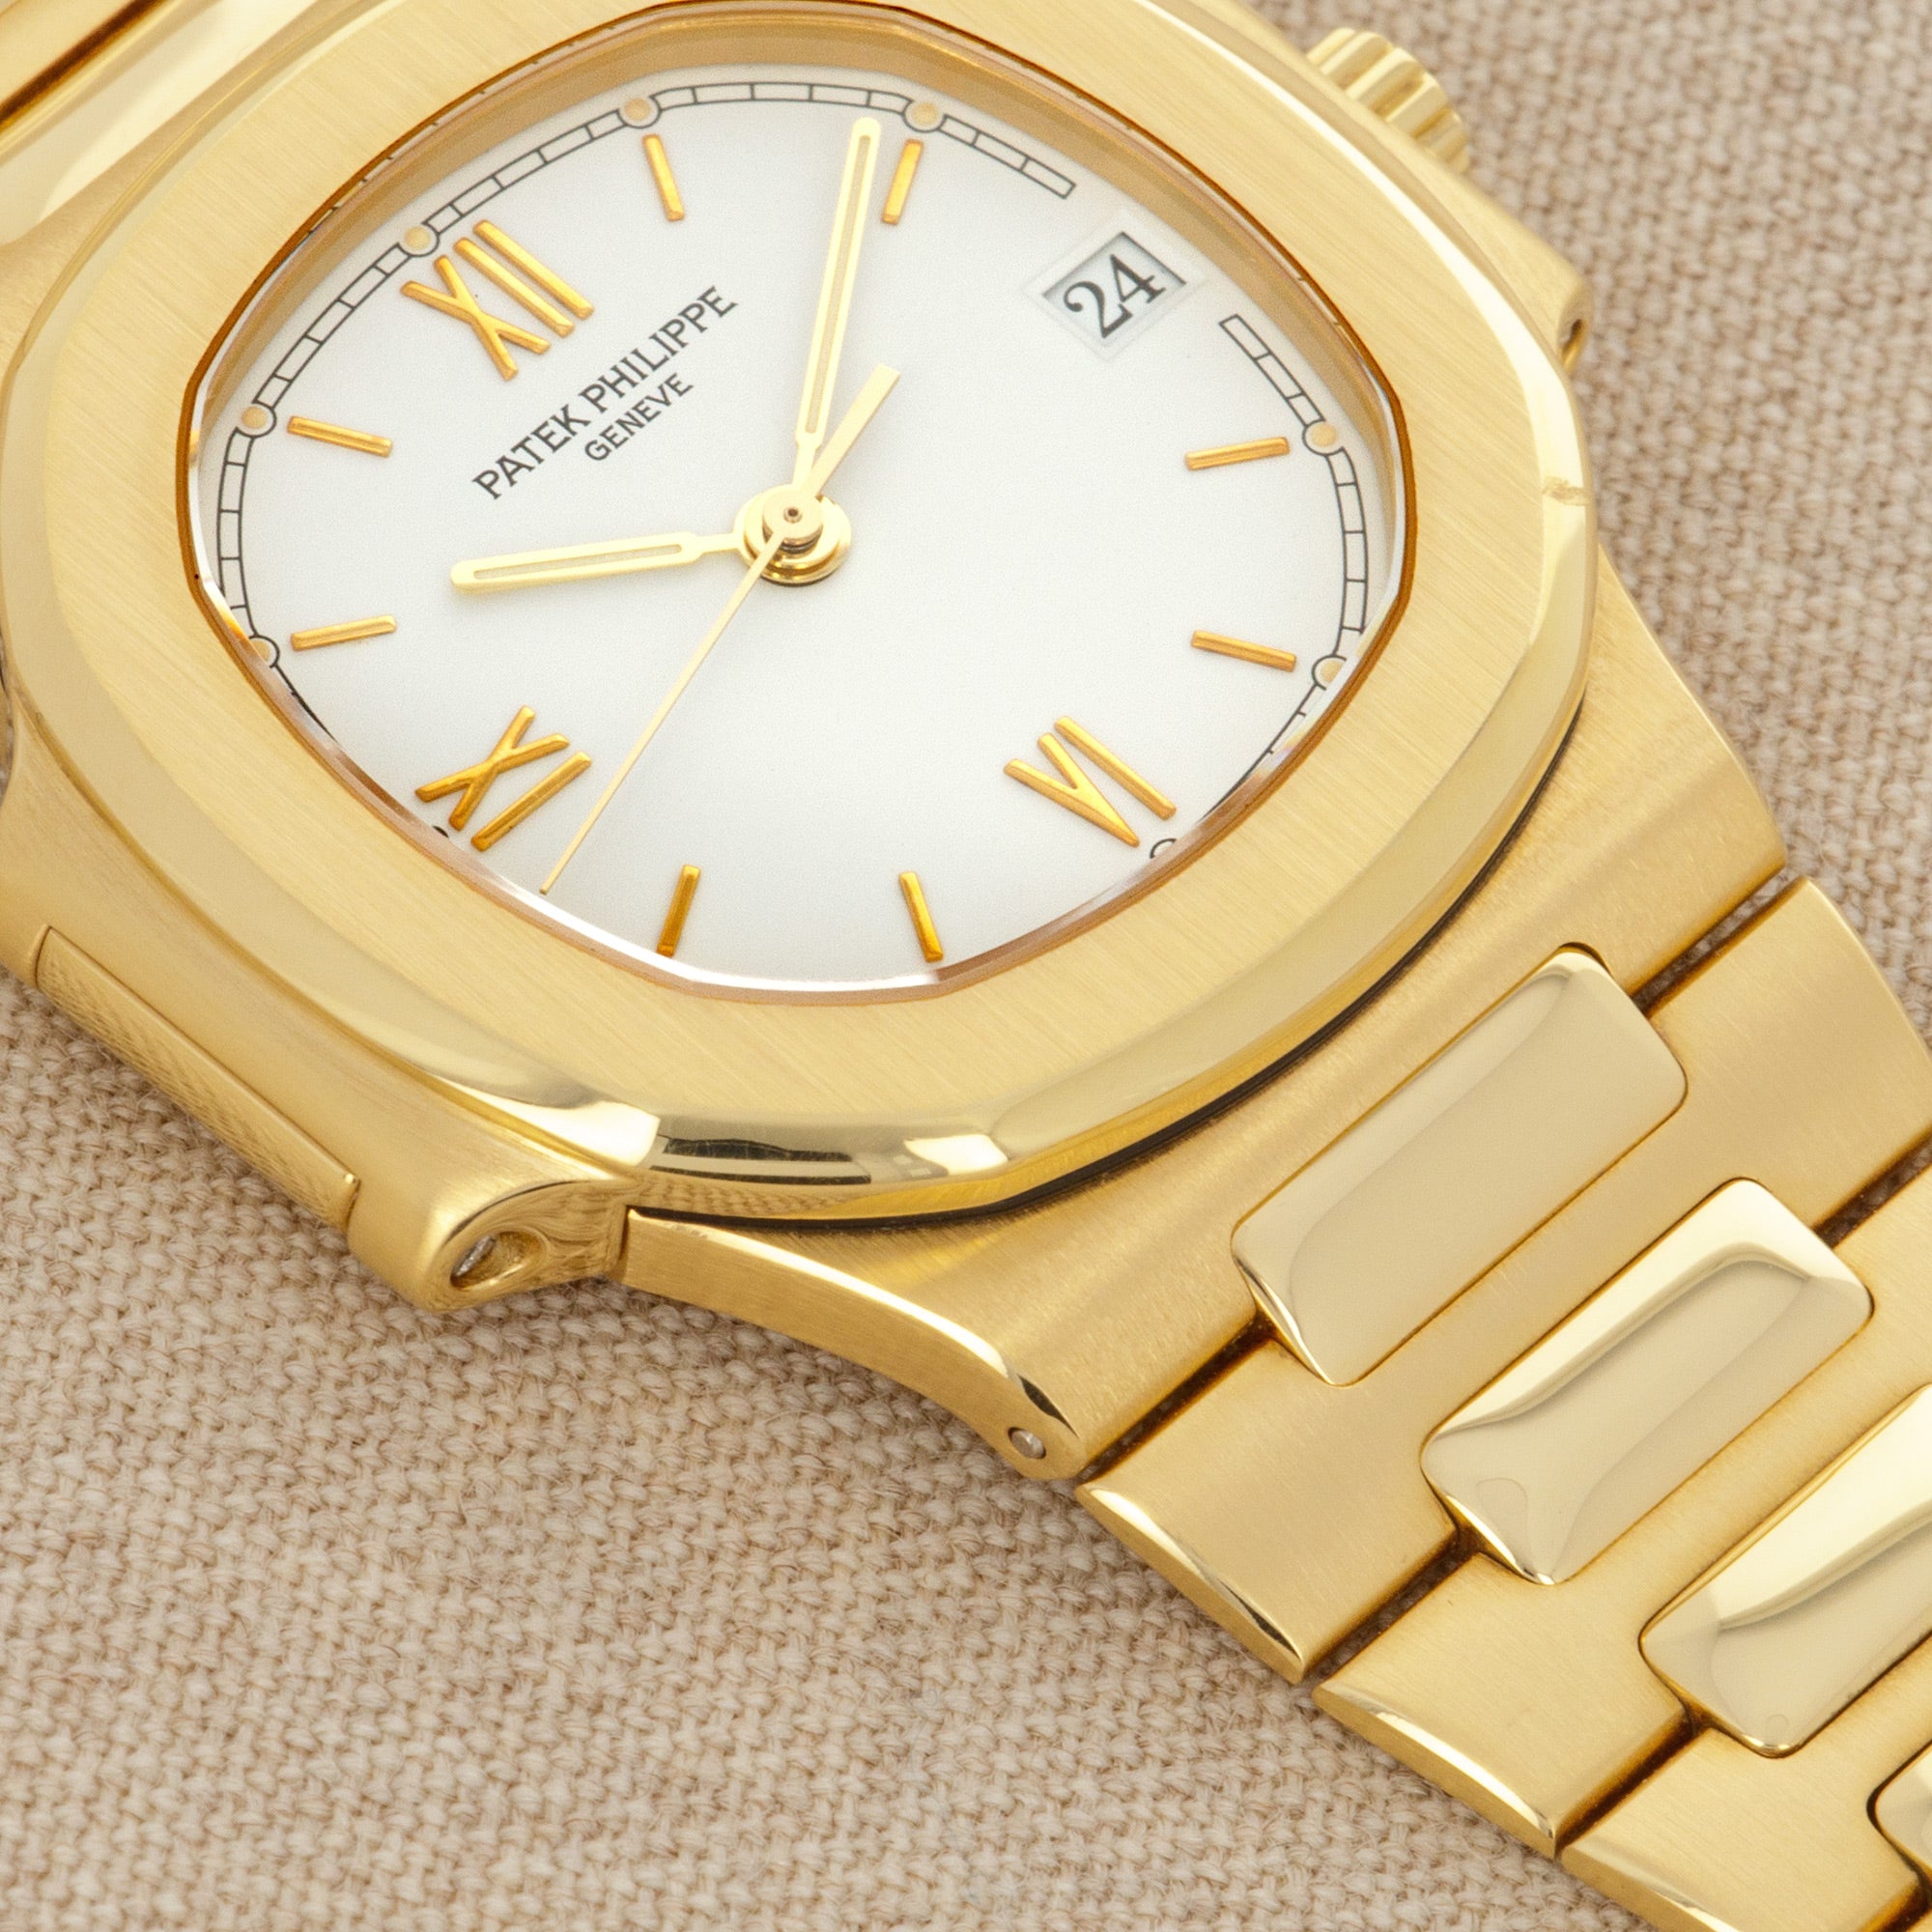 Patek Philippe - Patek Philippe Yellow Gold Nautilus Watch Ref. 3800 with Rare White Roman Numerals Dial - The Keystone Watches